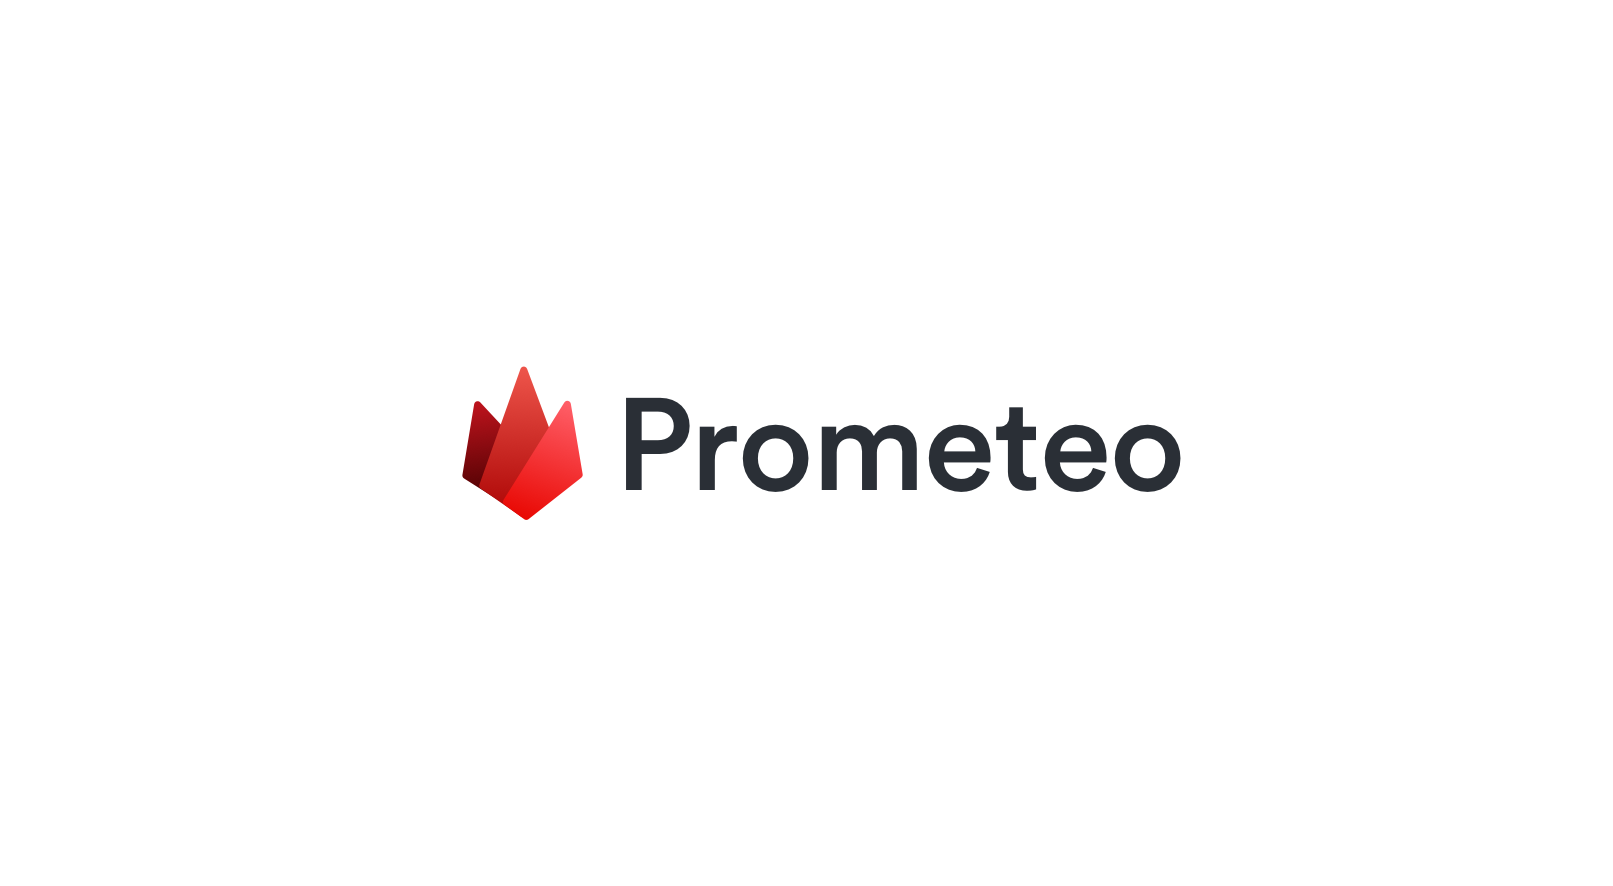 Prometeo Logo